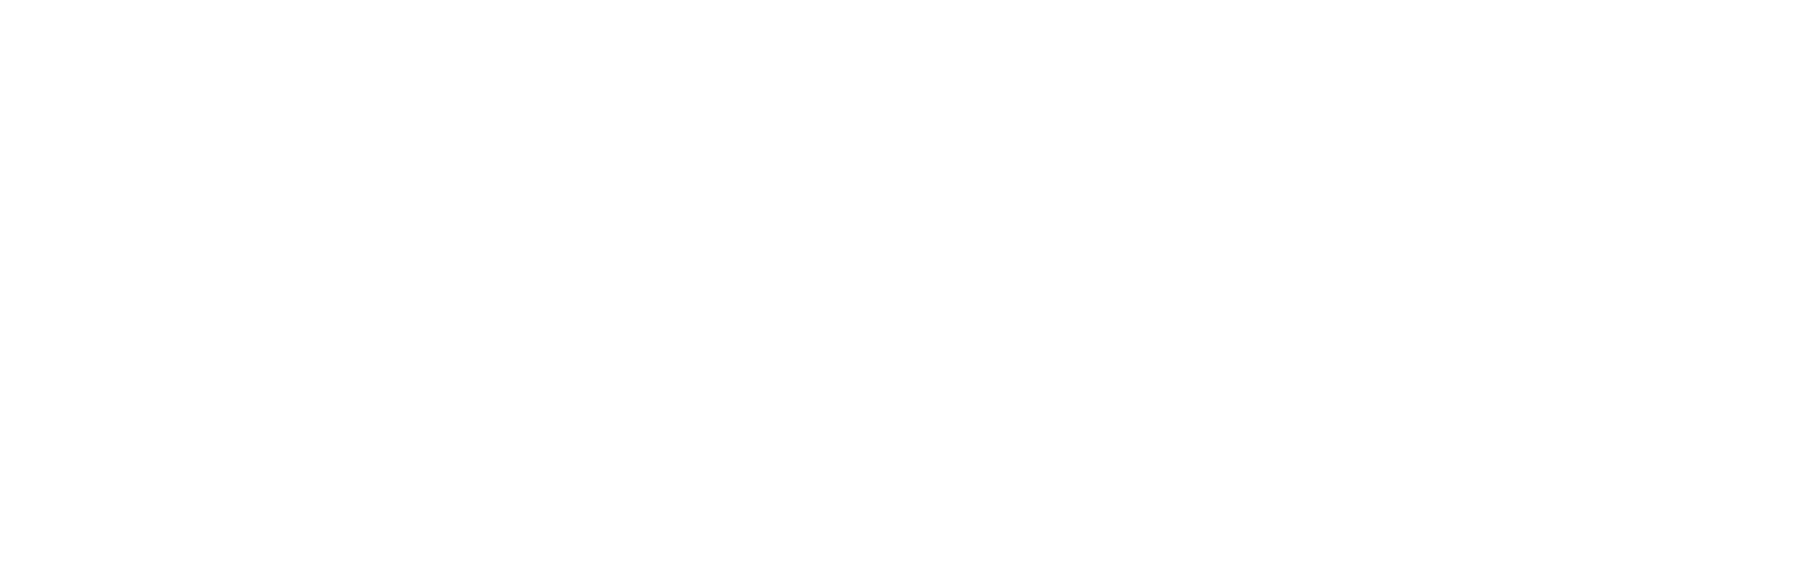 Matsiko - Through These Eyes logo